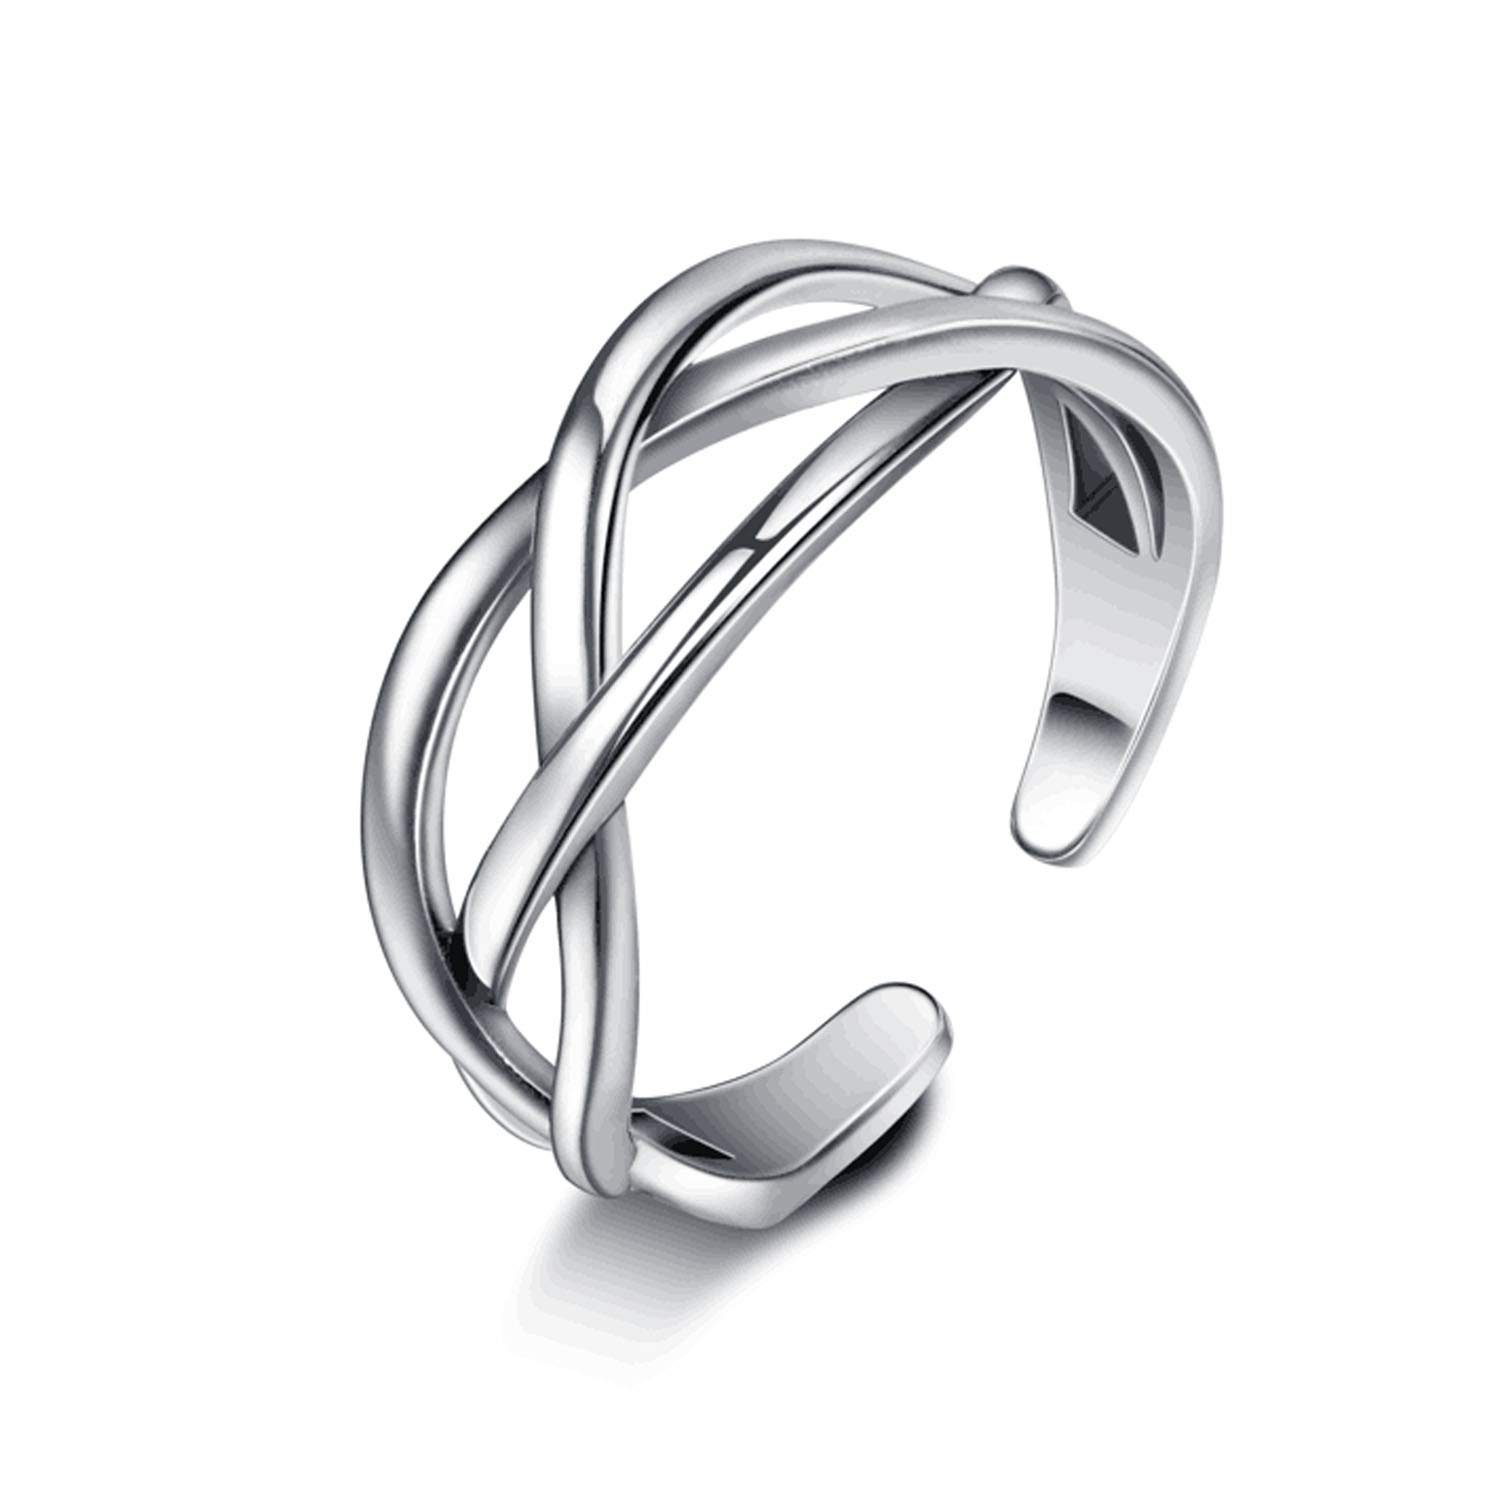 Haiaveng Fingerring Vintage geknoteter Ring 925 Sterling Silber verstellbarer Ring, für Männer und Frauen